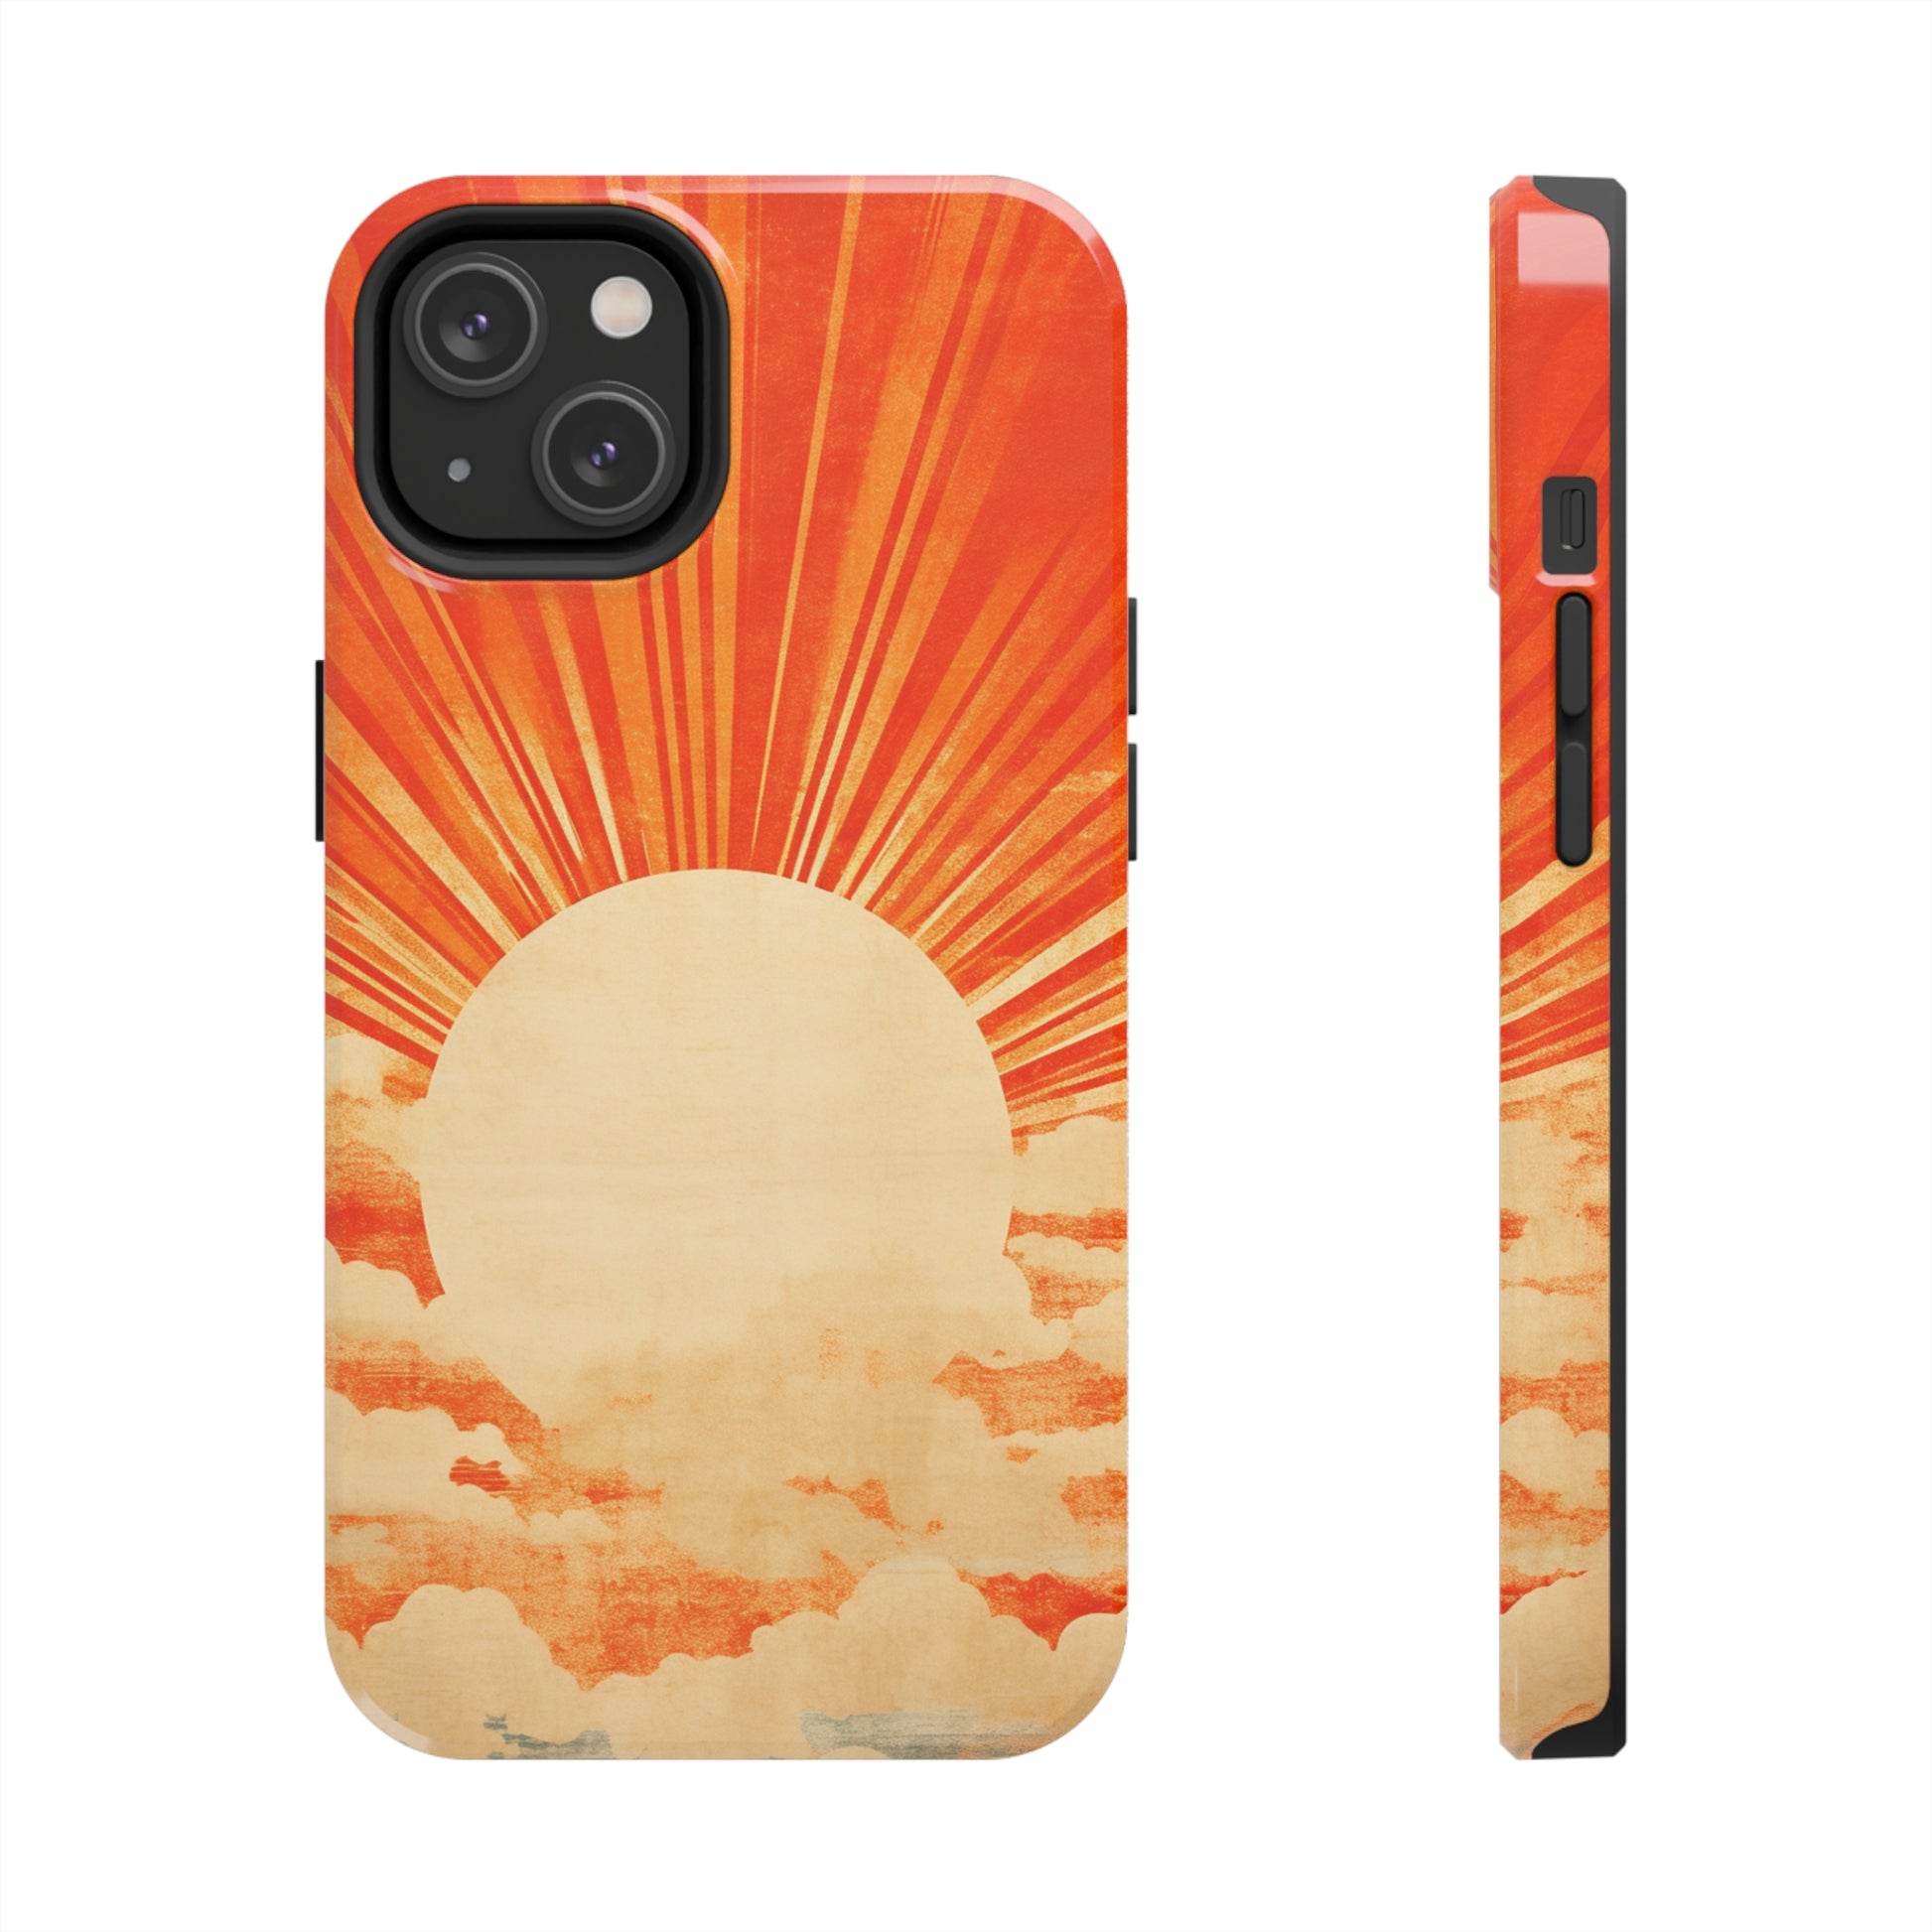 Colorful Retro Sunburst Design iPhone Protective Case